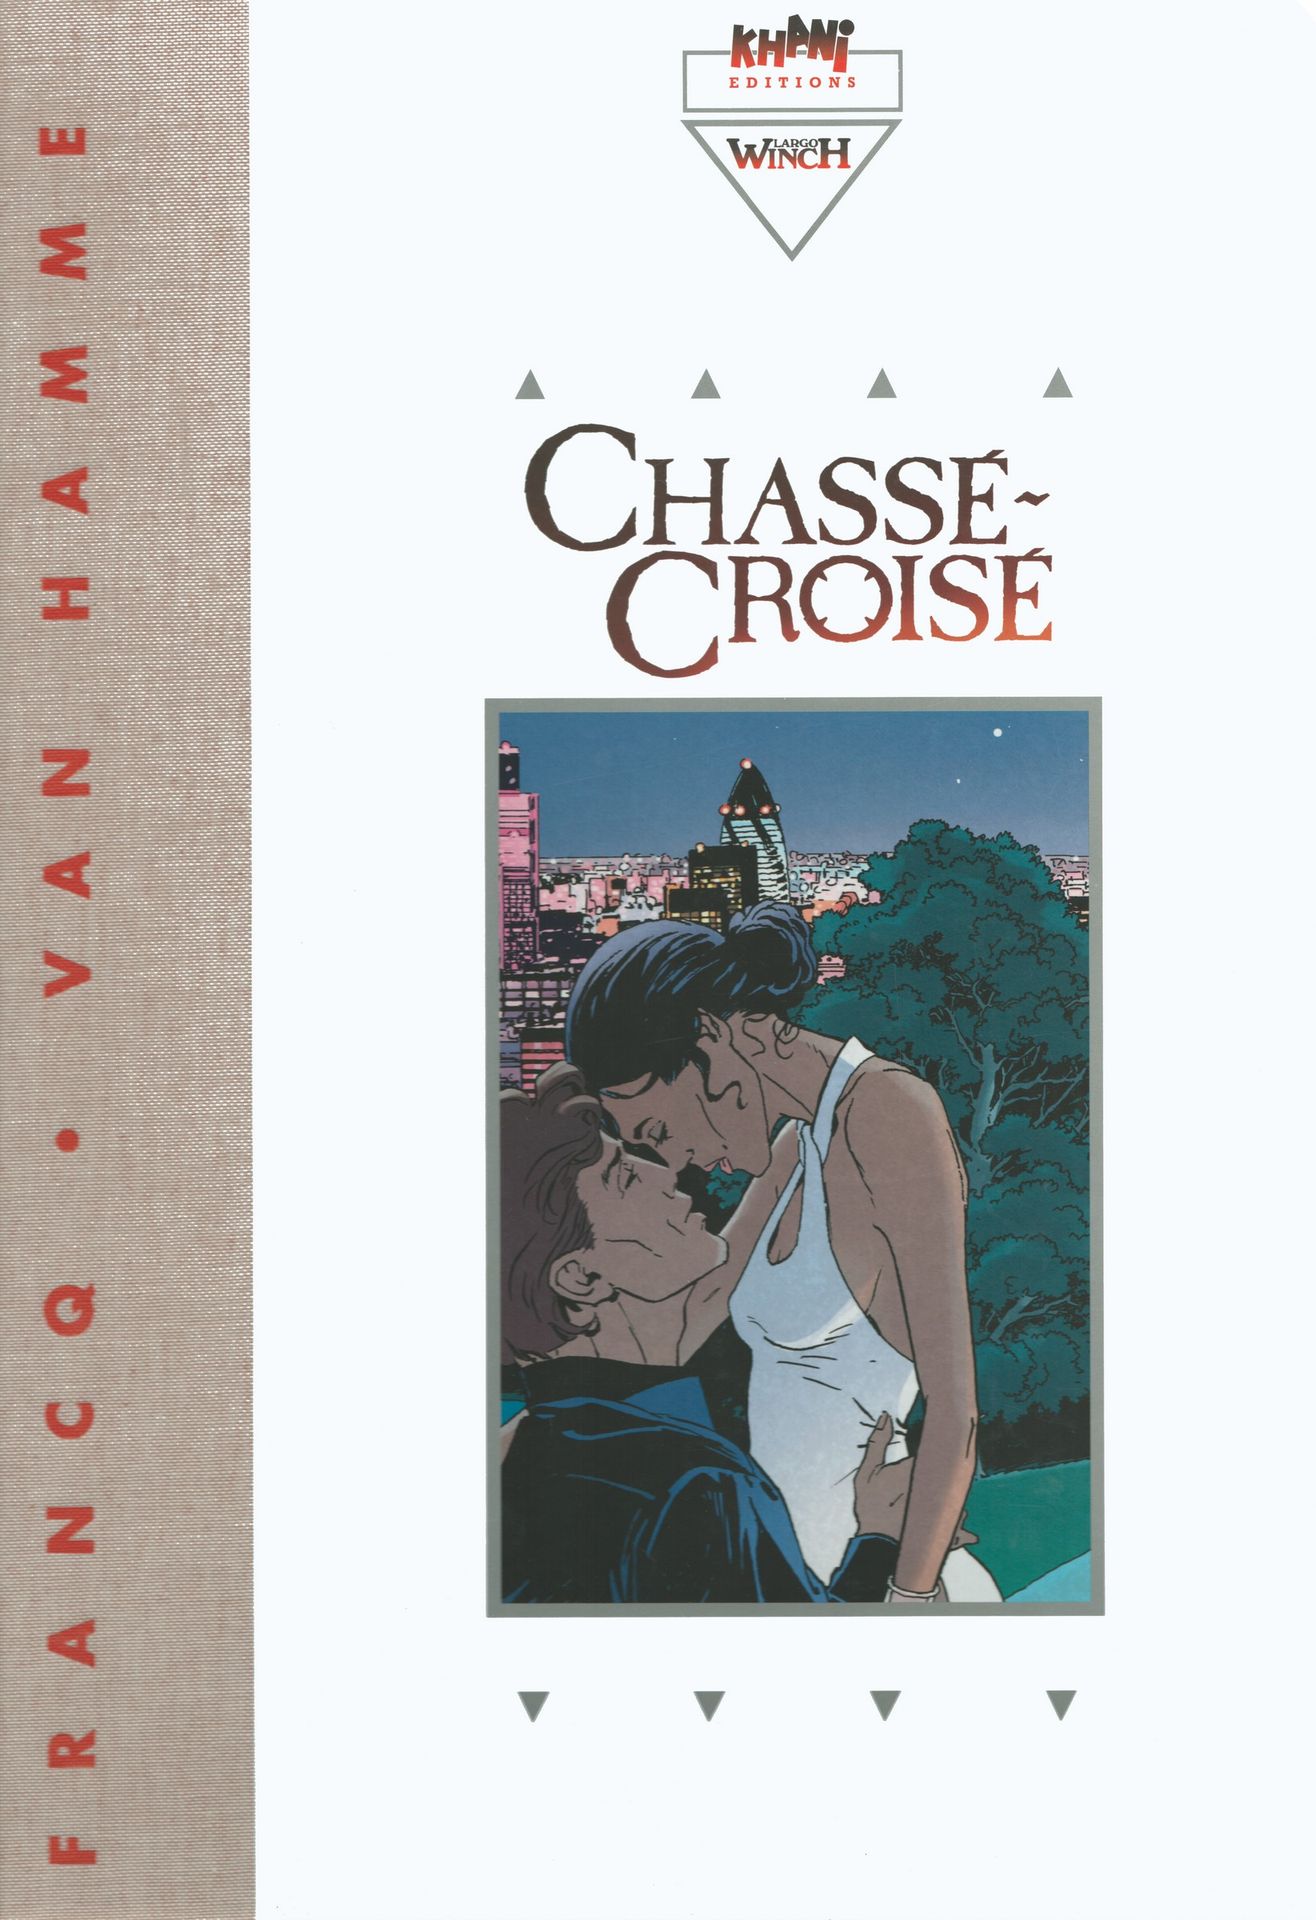 FRANCQ Largo Winch. Volumes 19 and 20: Chassé-croisé. First edition 350 copies. &hellip;